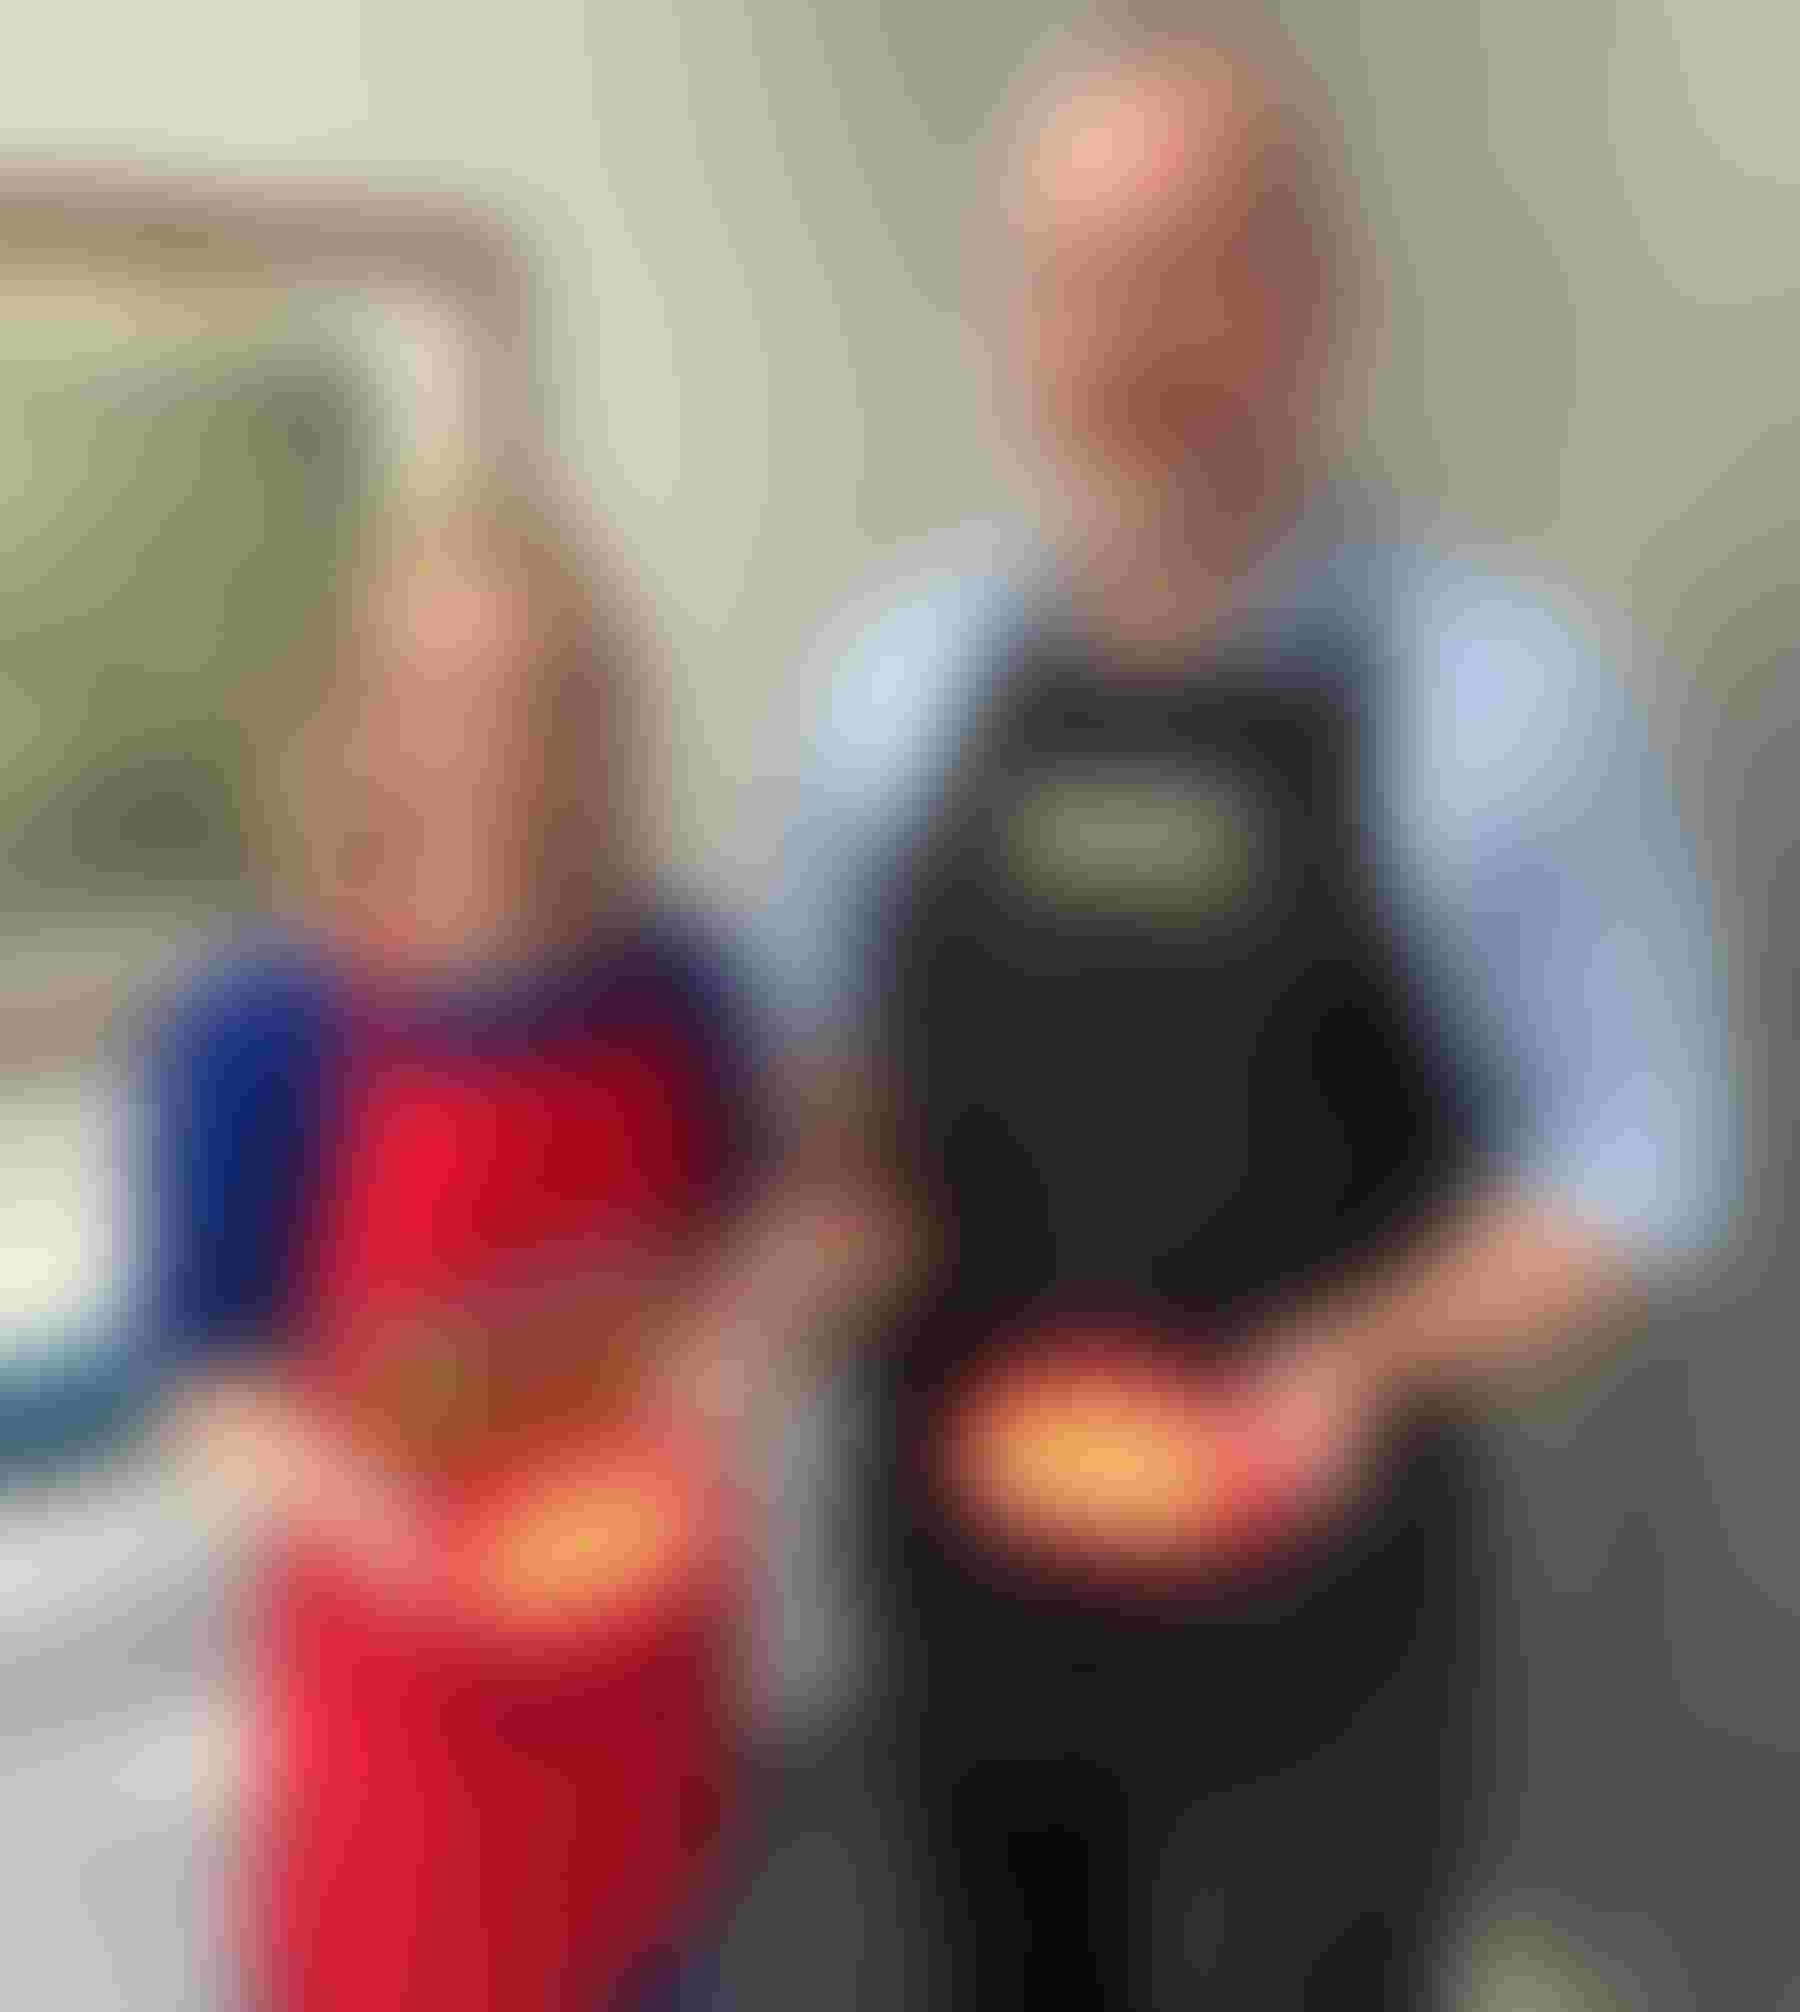 Wisconsin Agriculture Secretary Randy Romanski and Ashley Hagenow holding pancakes anmaple syrup